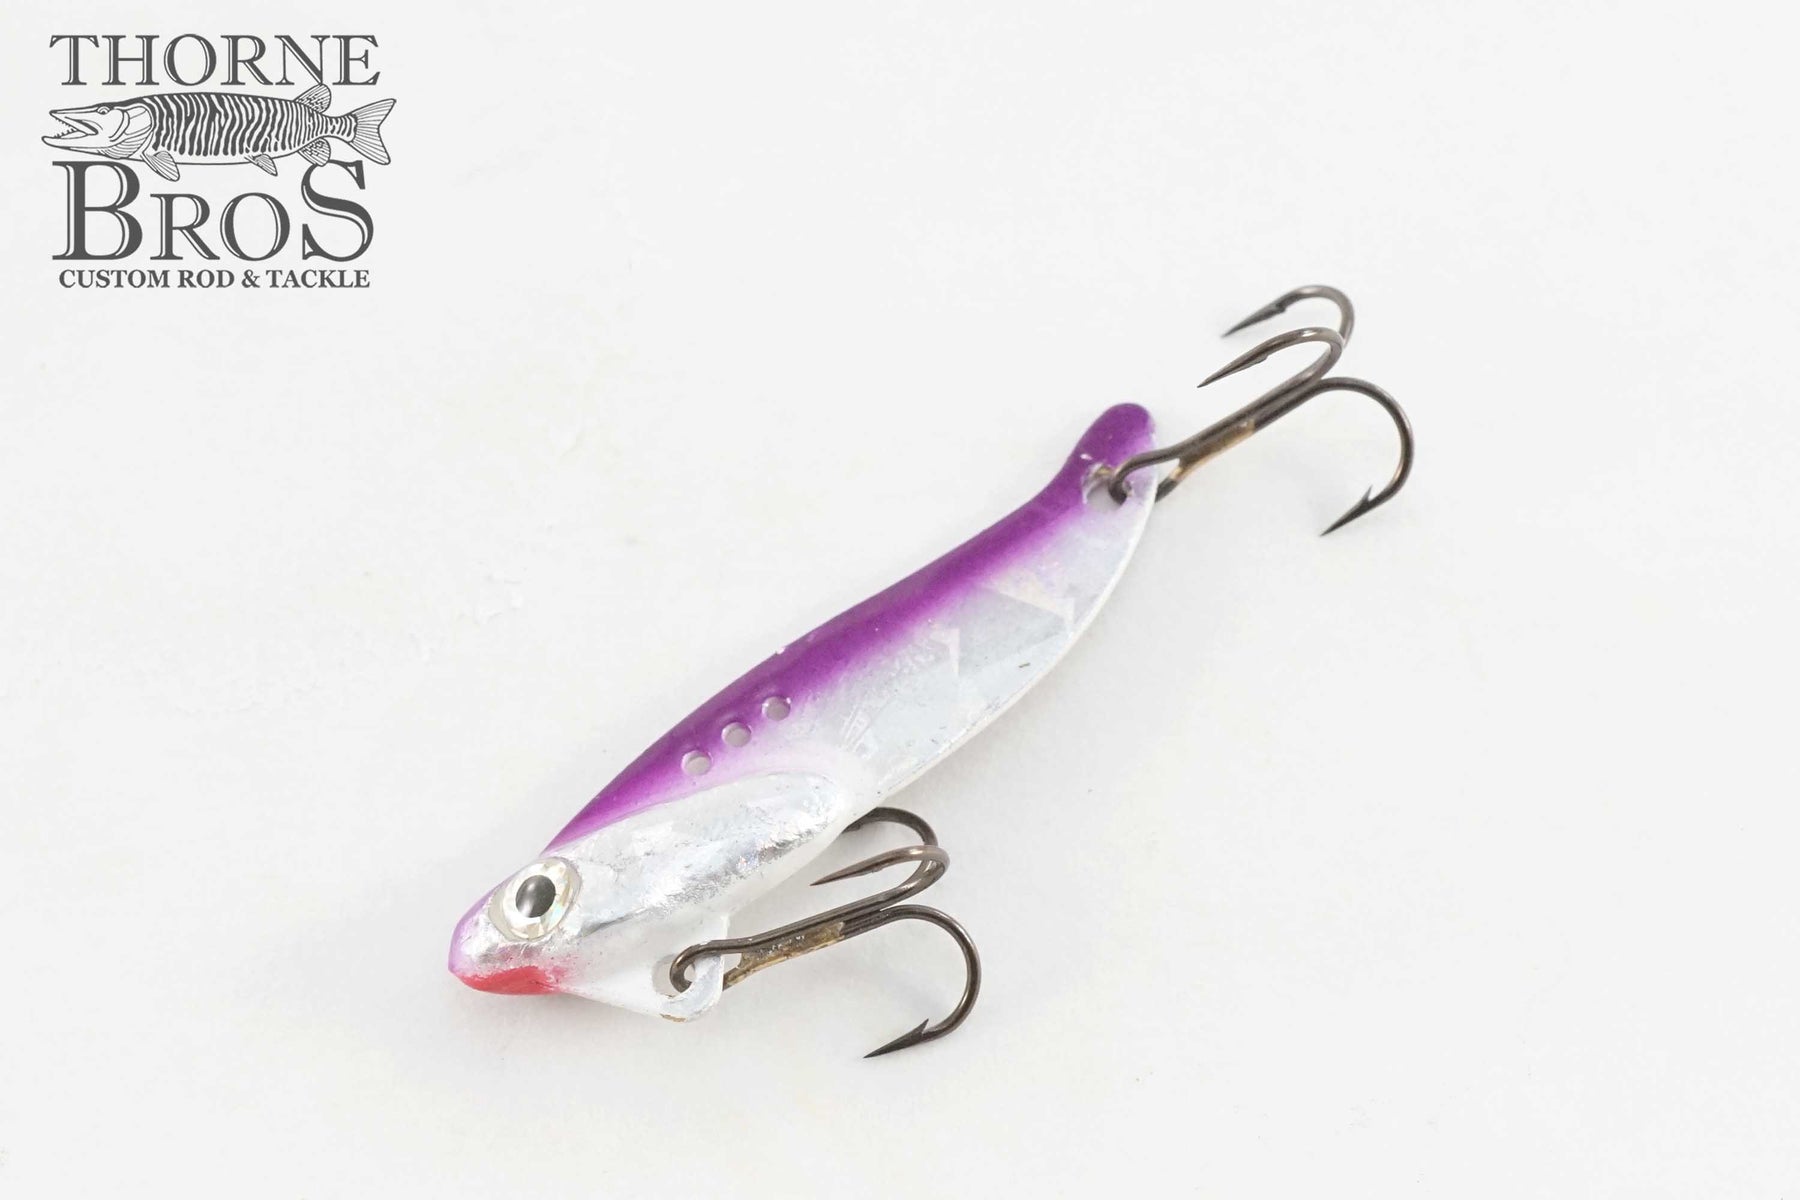 (5 Pack) Fire Tiger Custom Bass Fishing Bladed Jigs-Vibrating Jigs 1/2oz